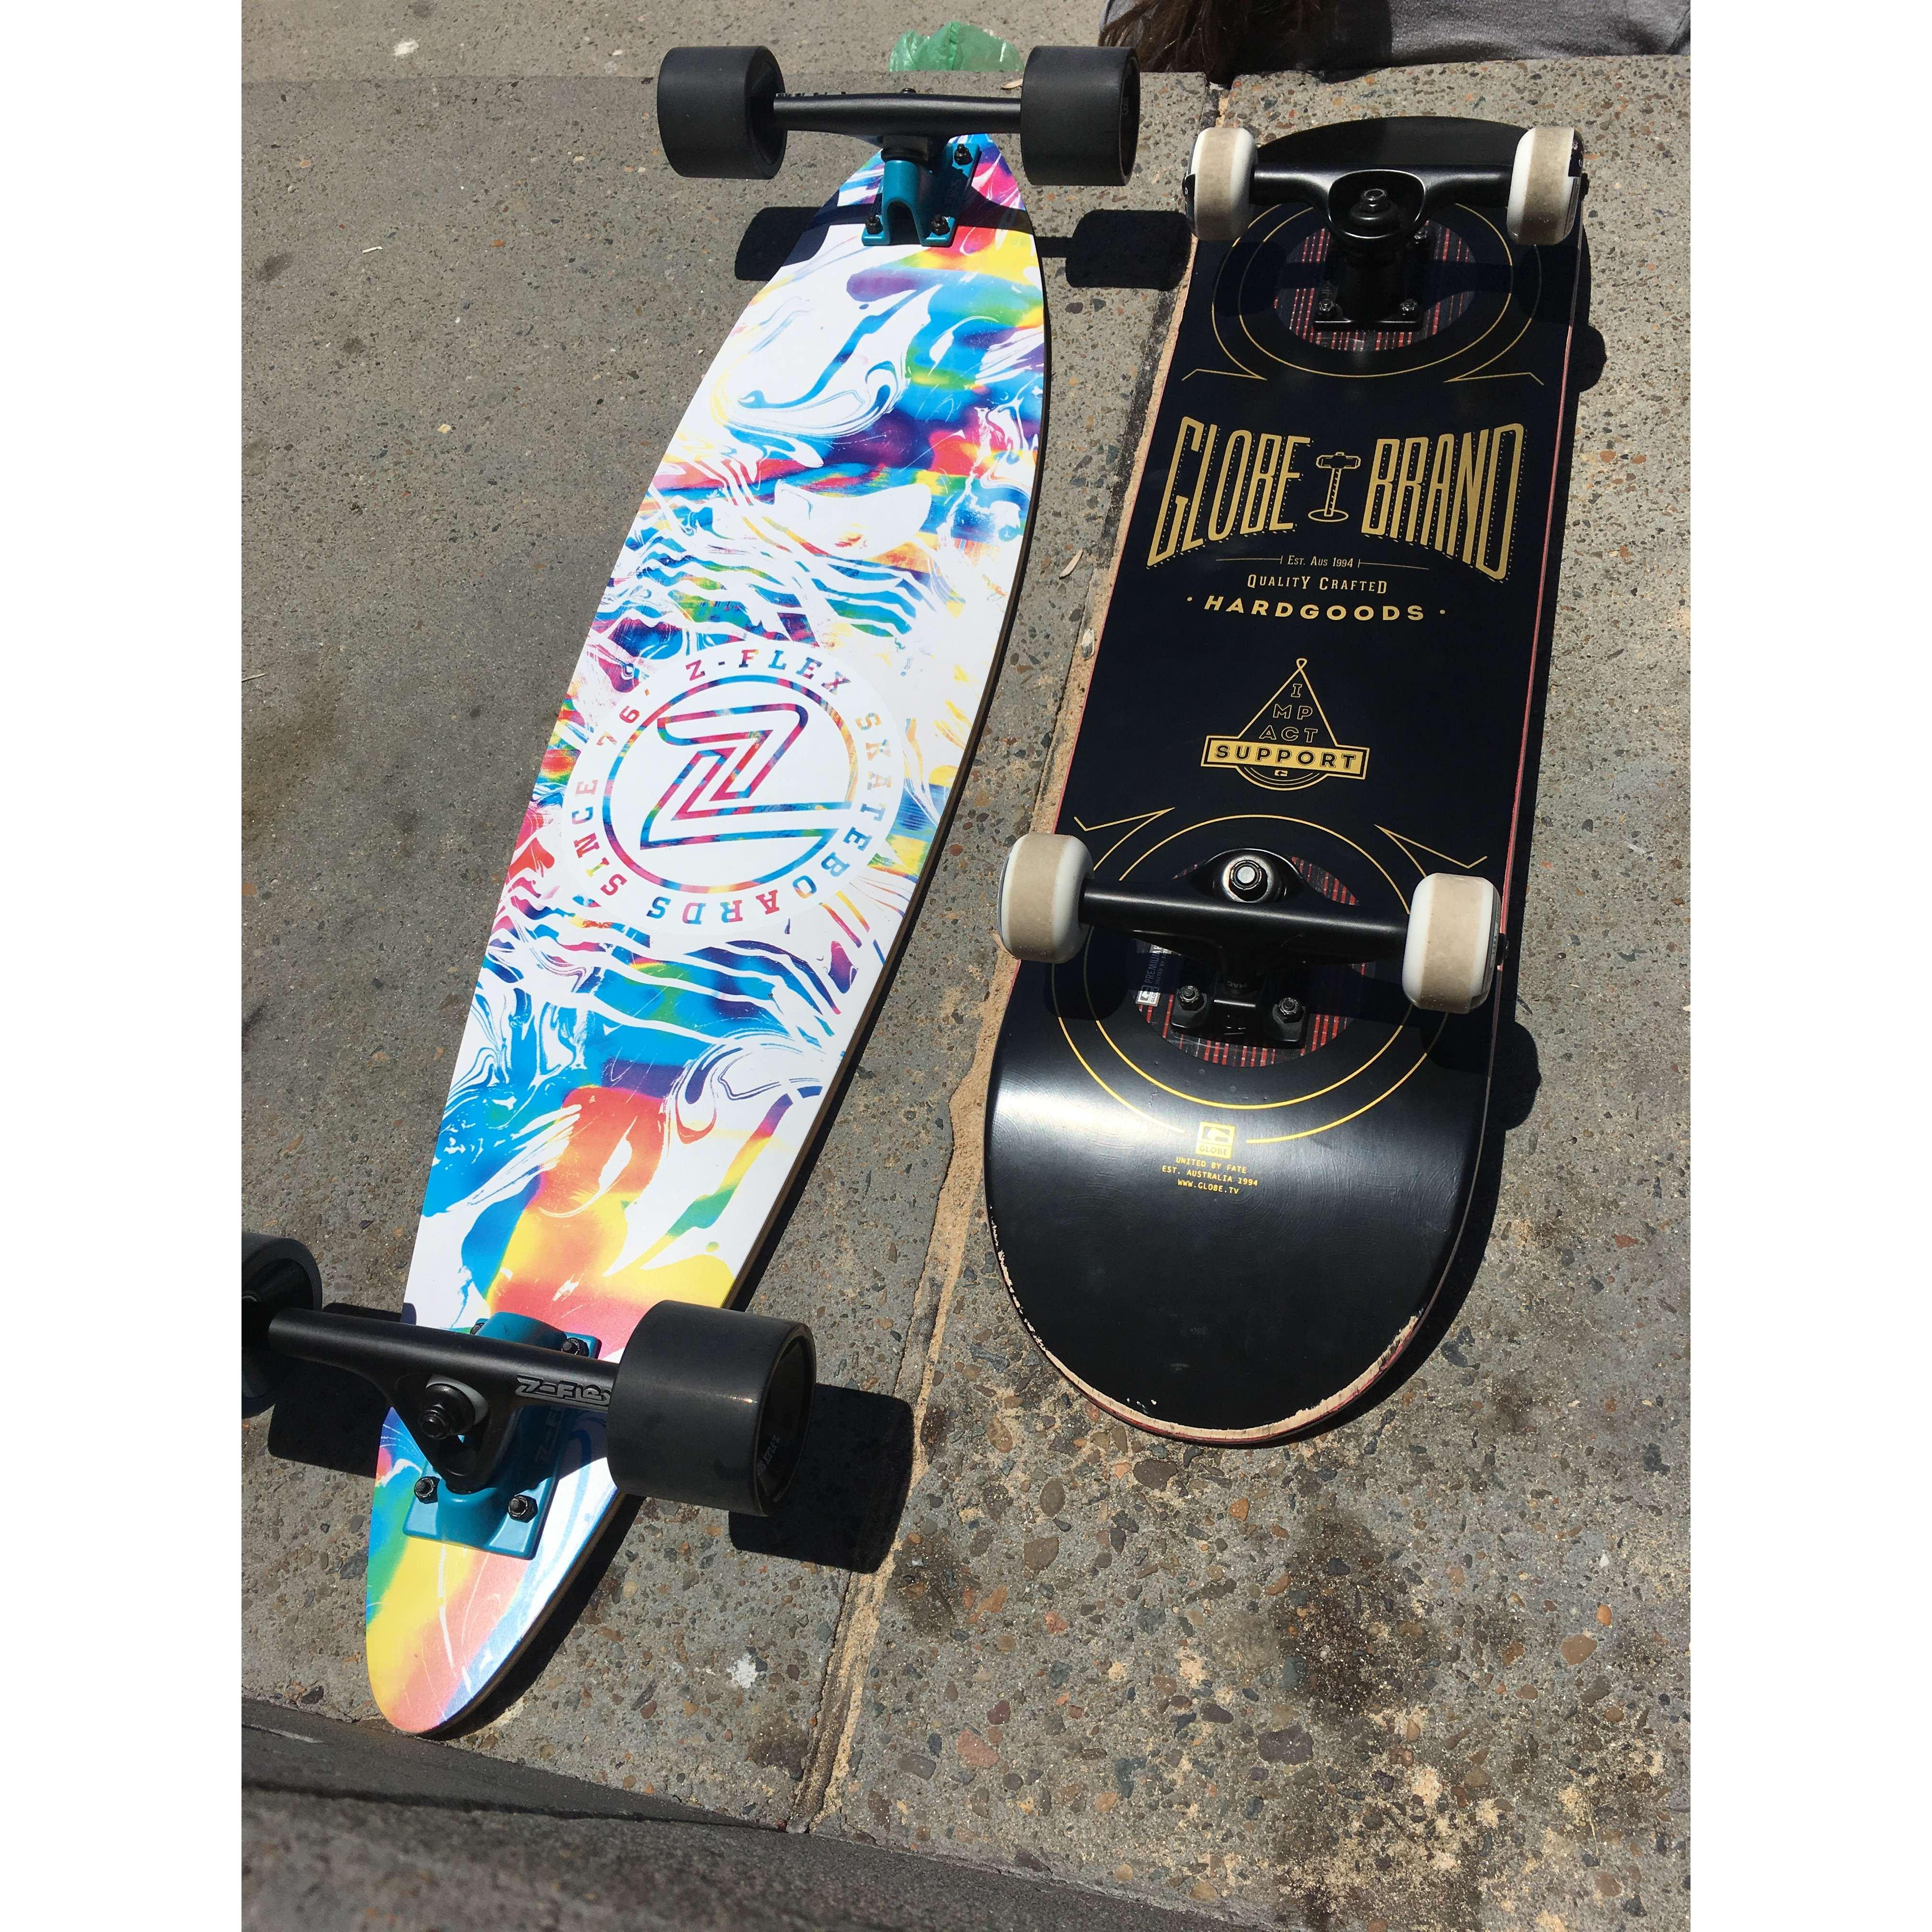 We bought skateboards in Australia <3